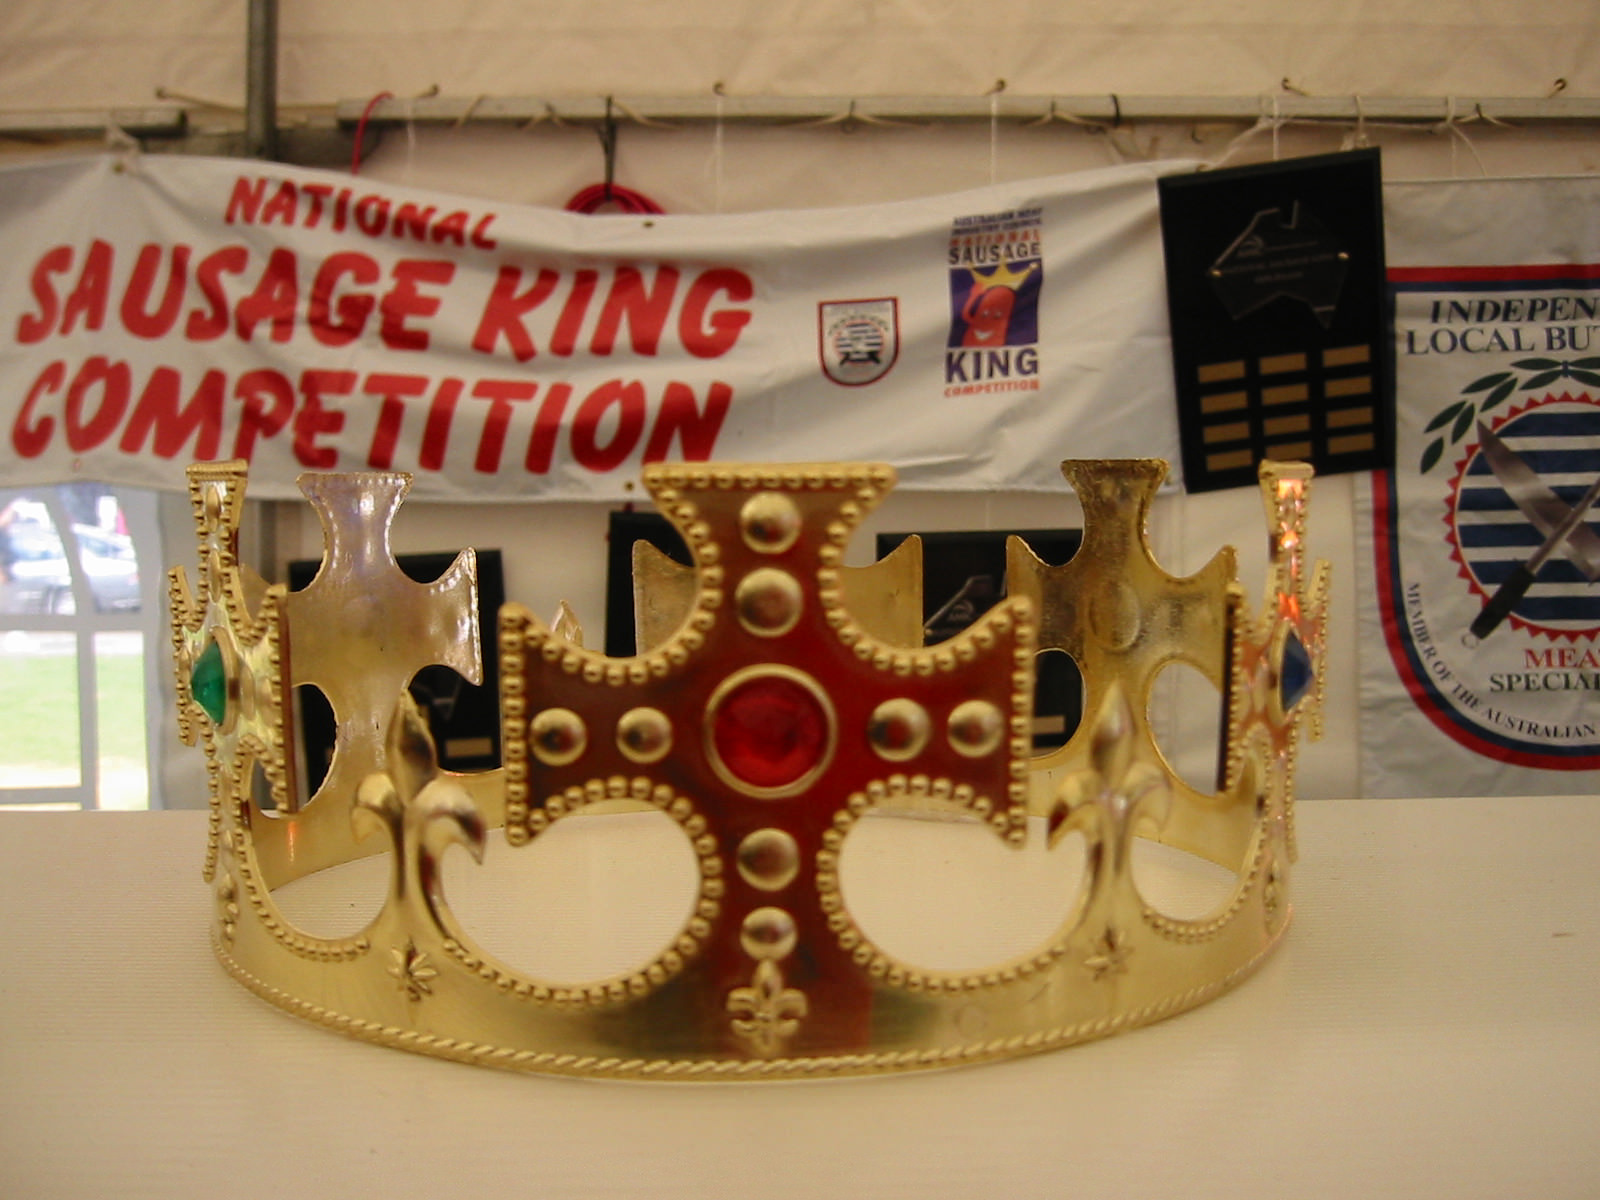 A Sausage King's crown?